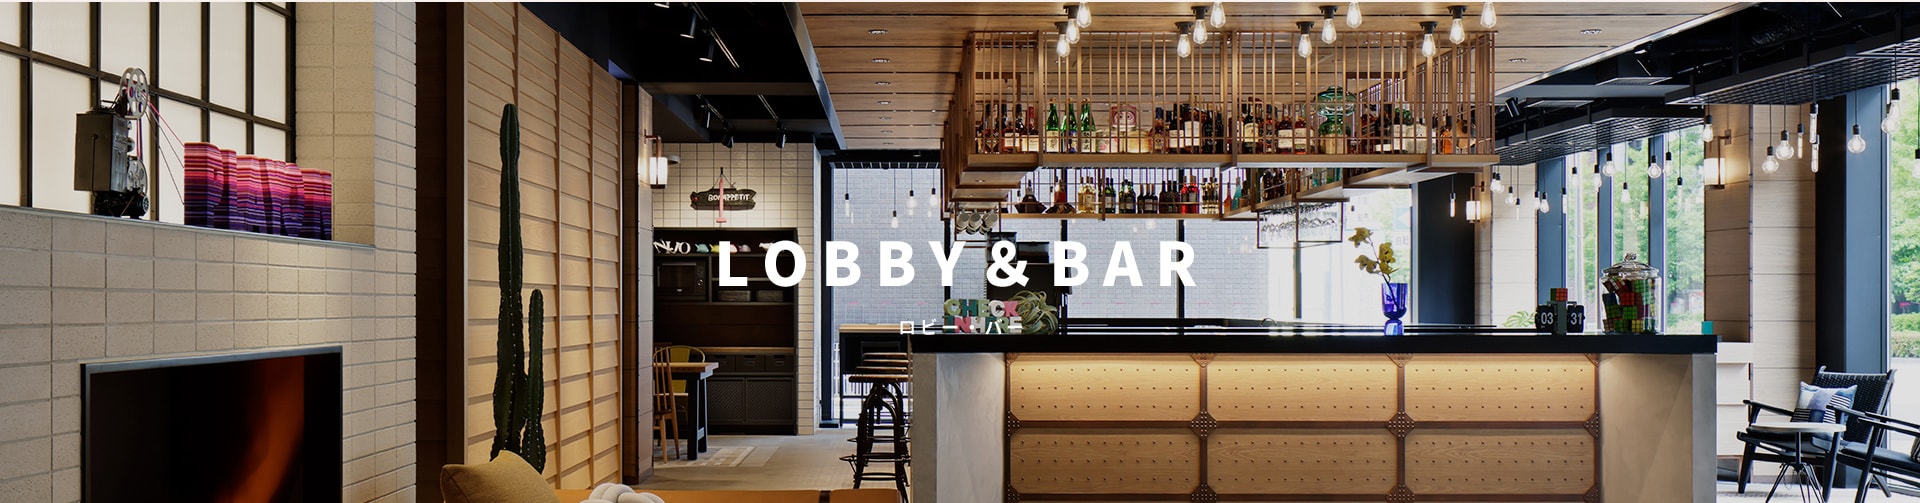 lobbybar